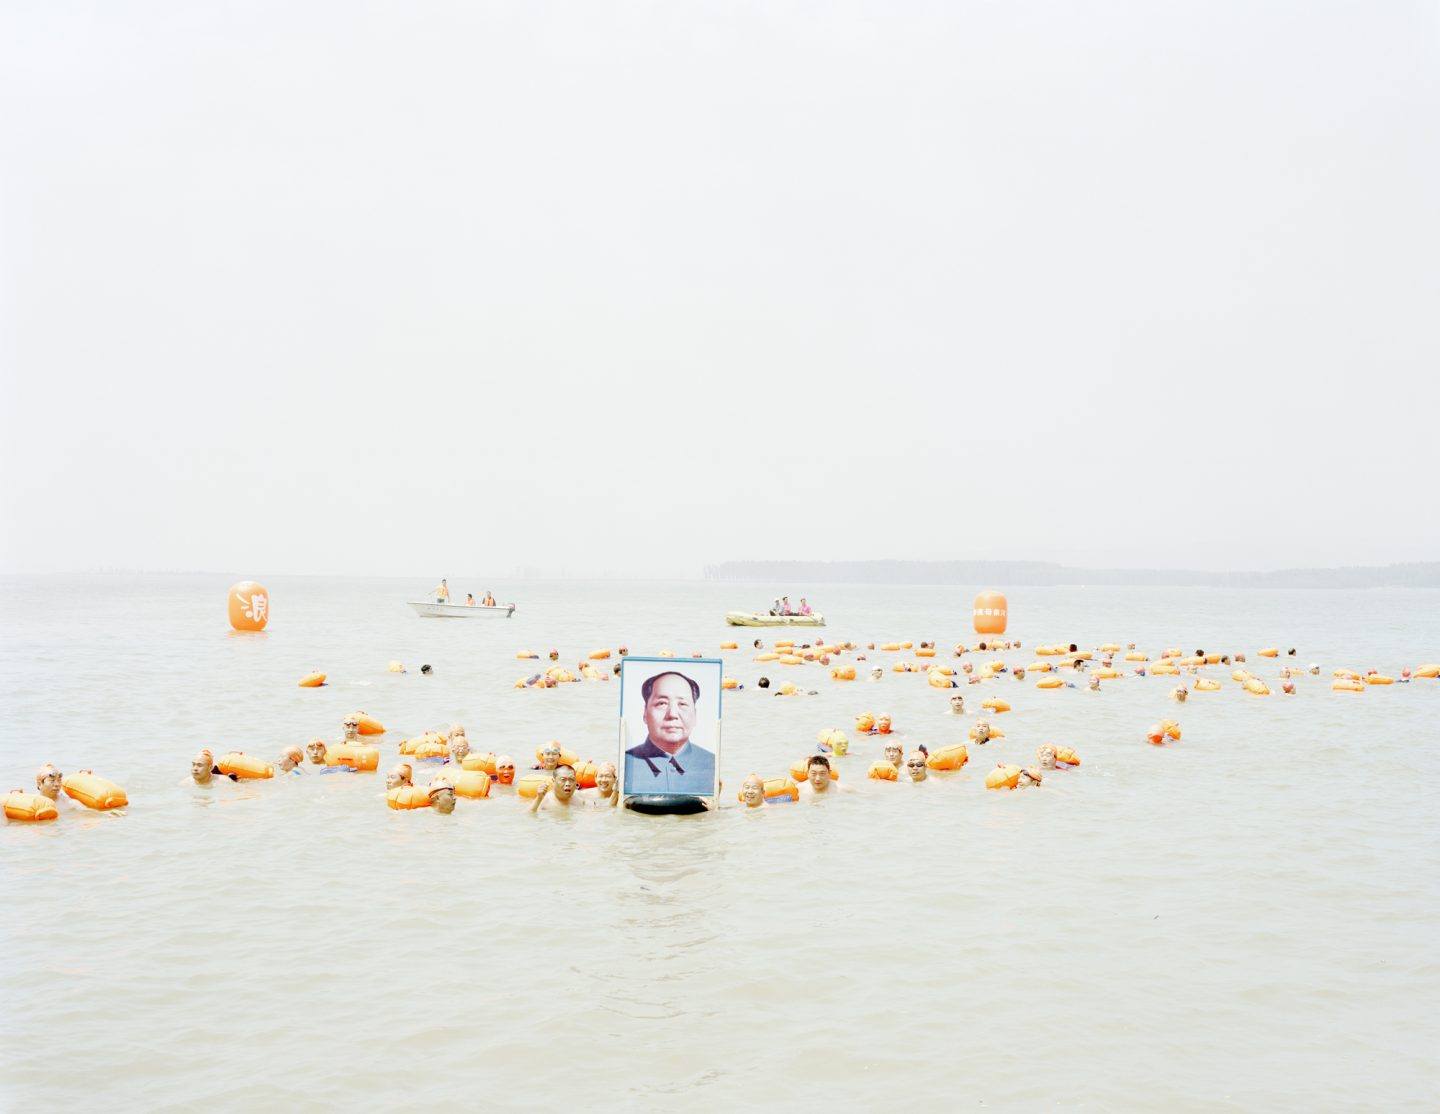 IGNANT-Photography-Zhang-Kechun-The-Yellow-River-003